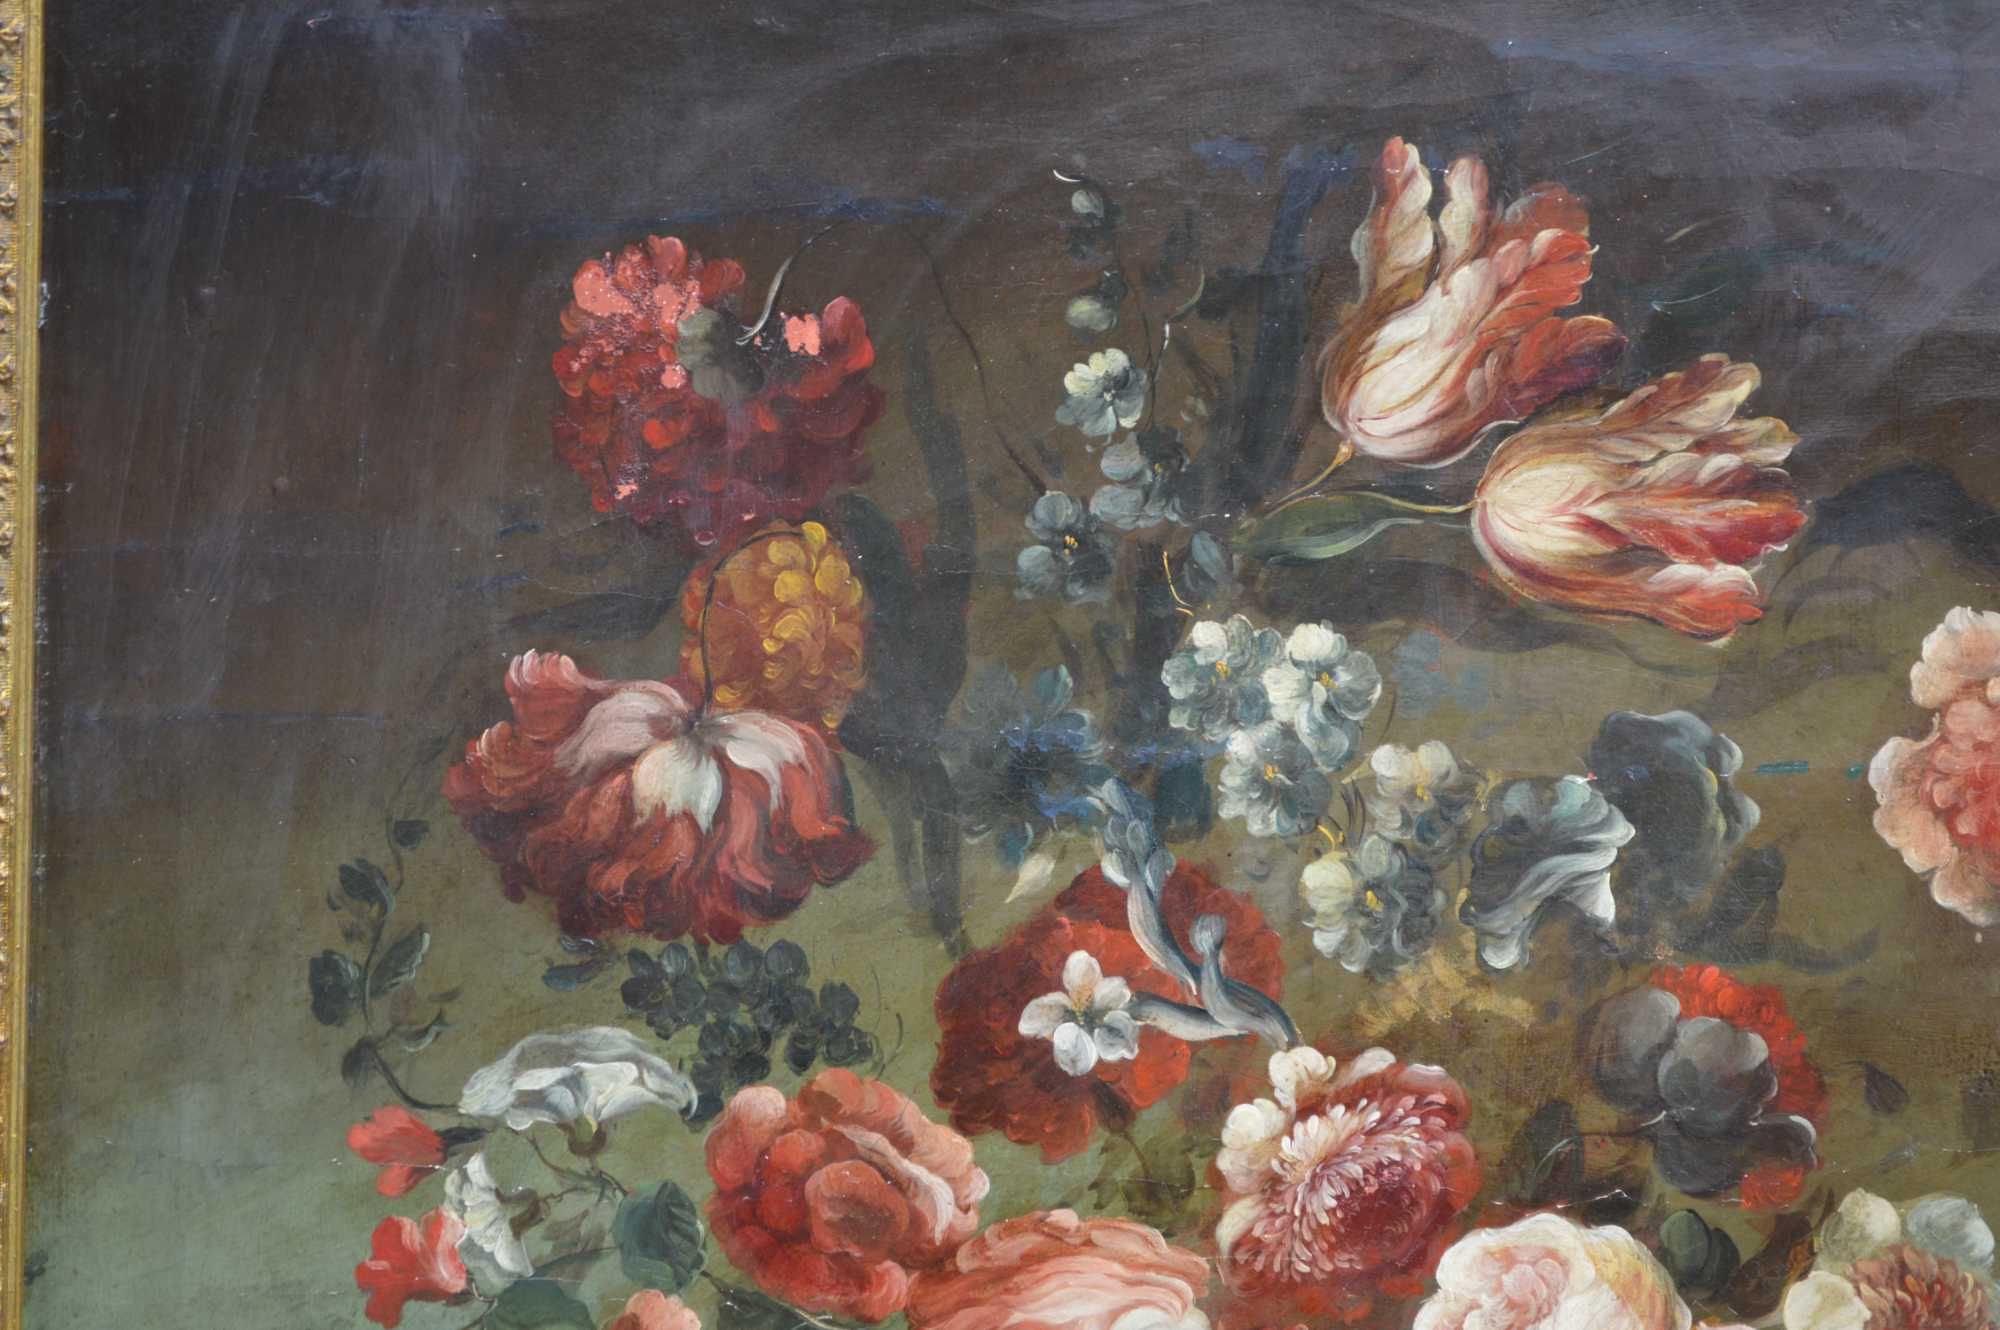 Rachel RUYSCH (1664-1750) "Натюрморт с роз"